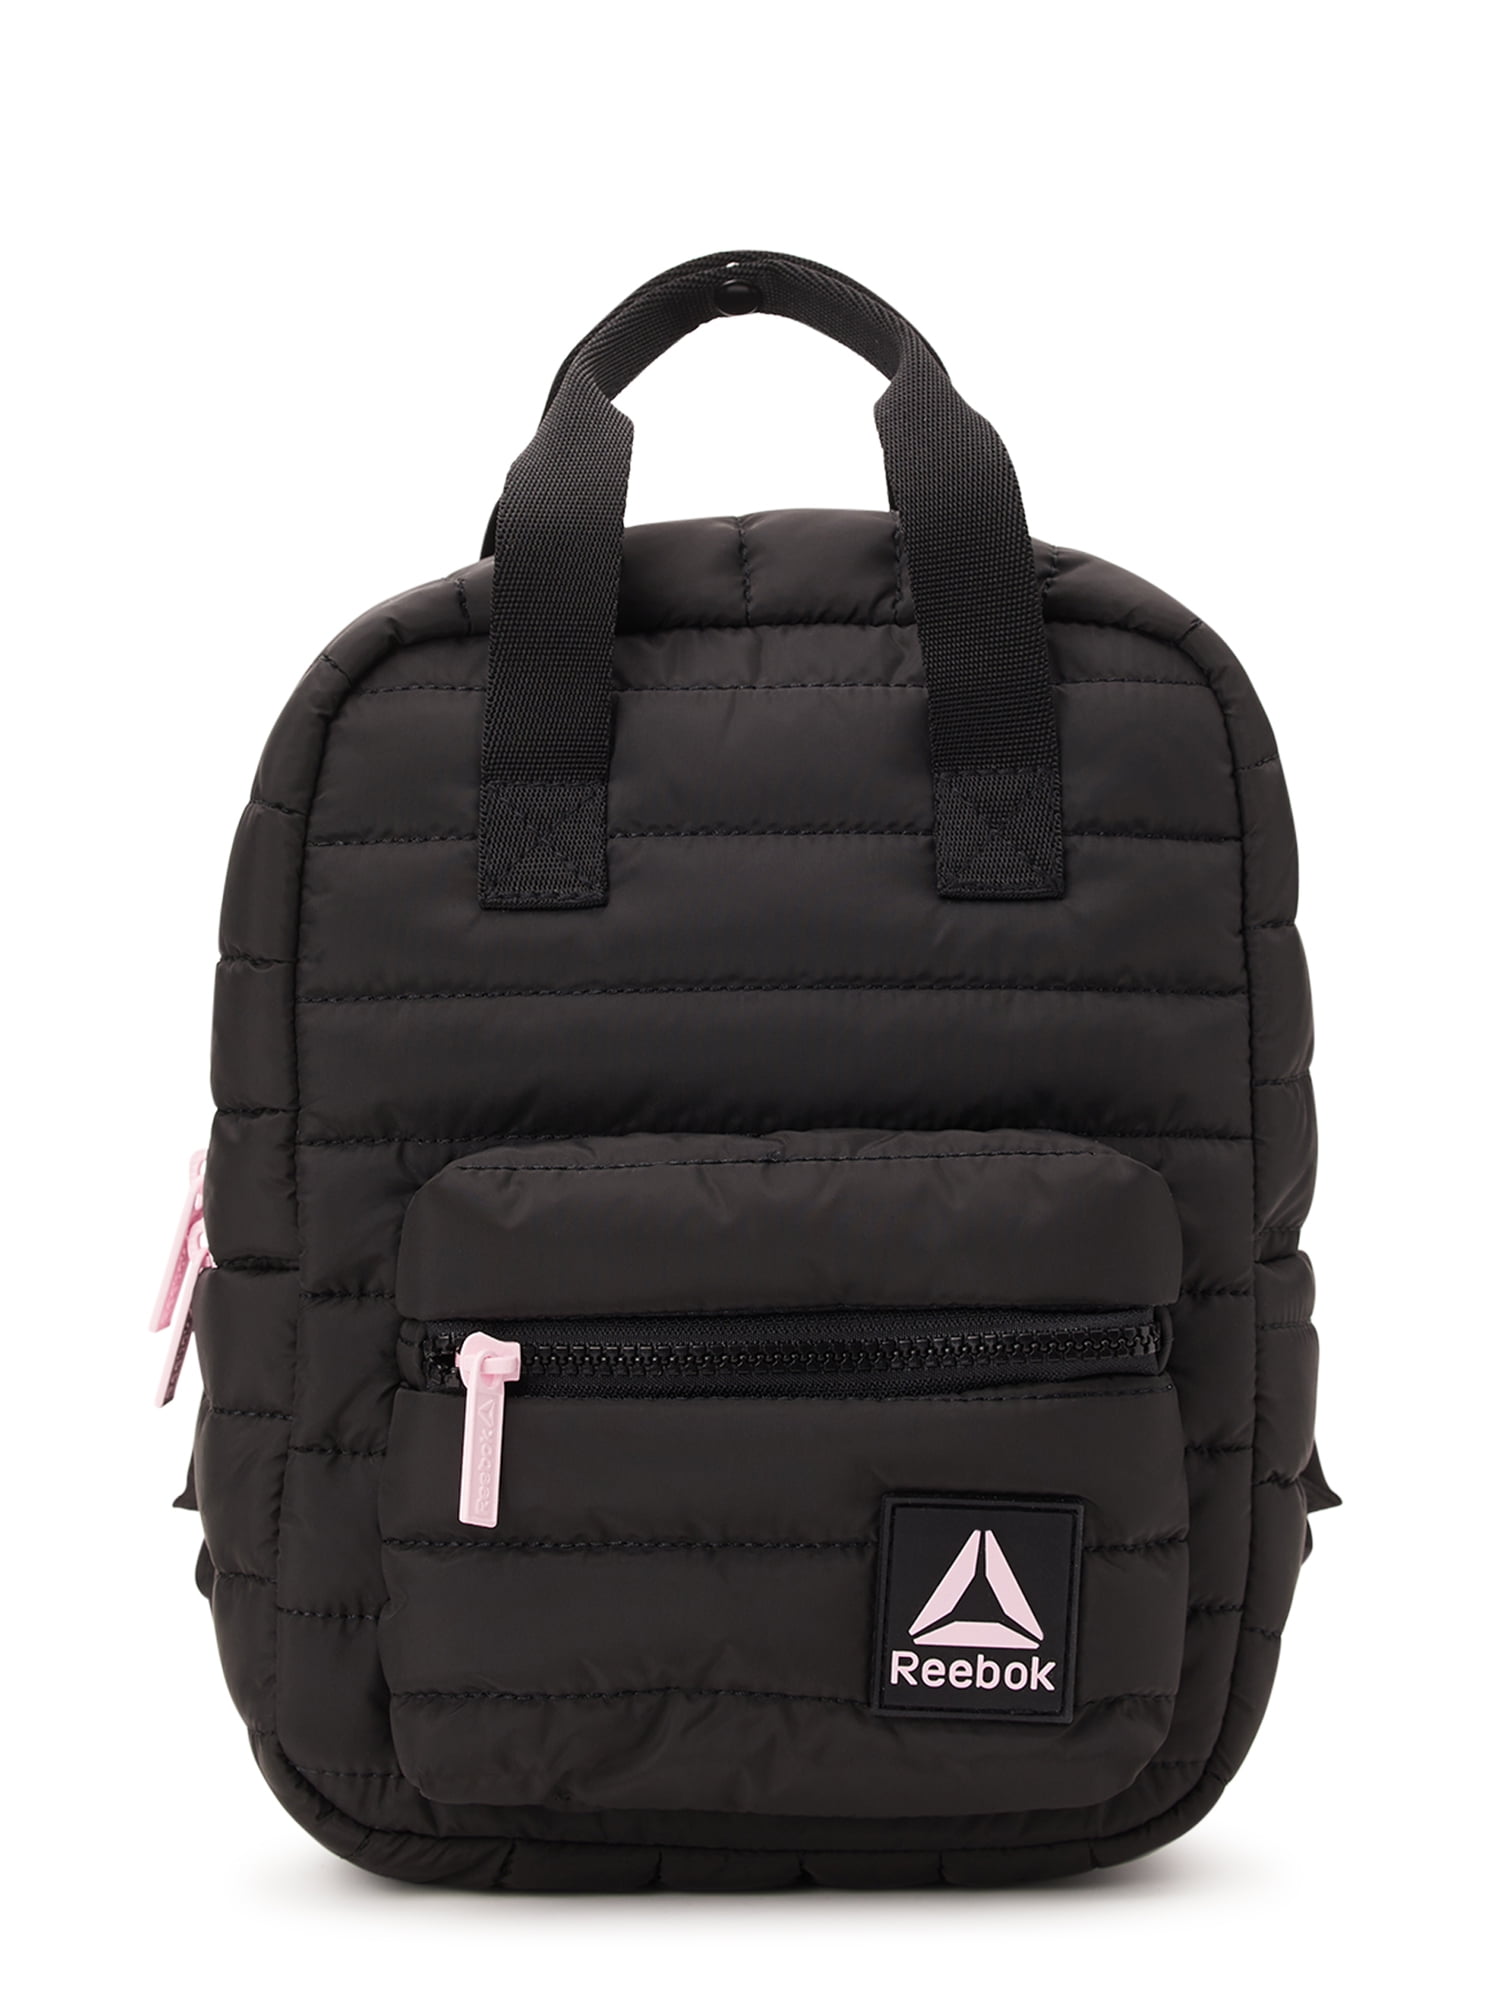 Reebok Women’s Cameron Mini Backpack, Black